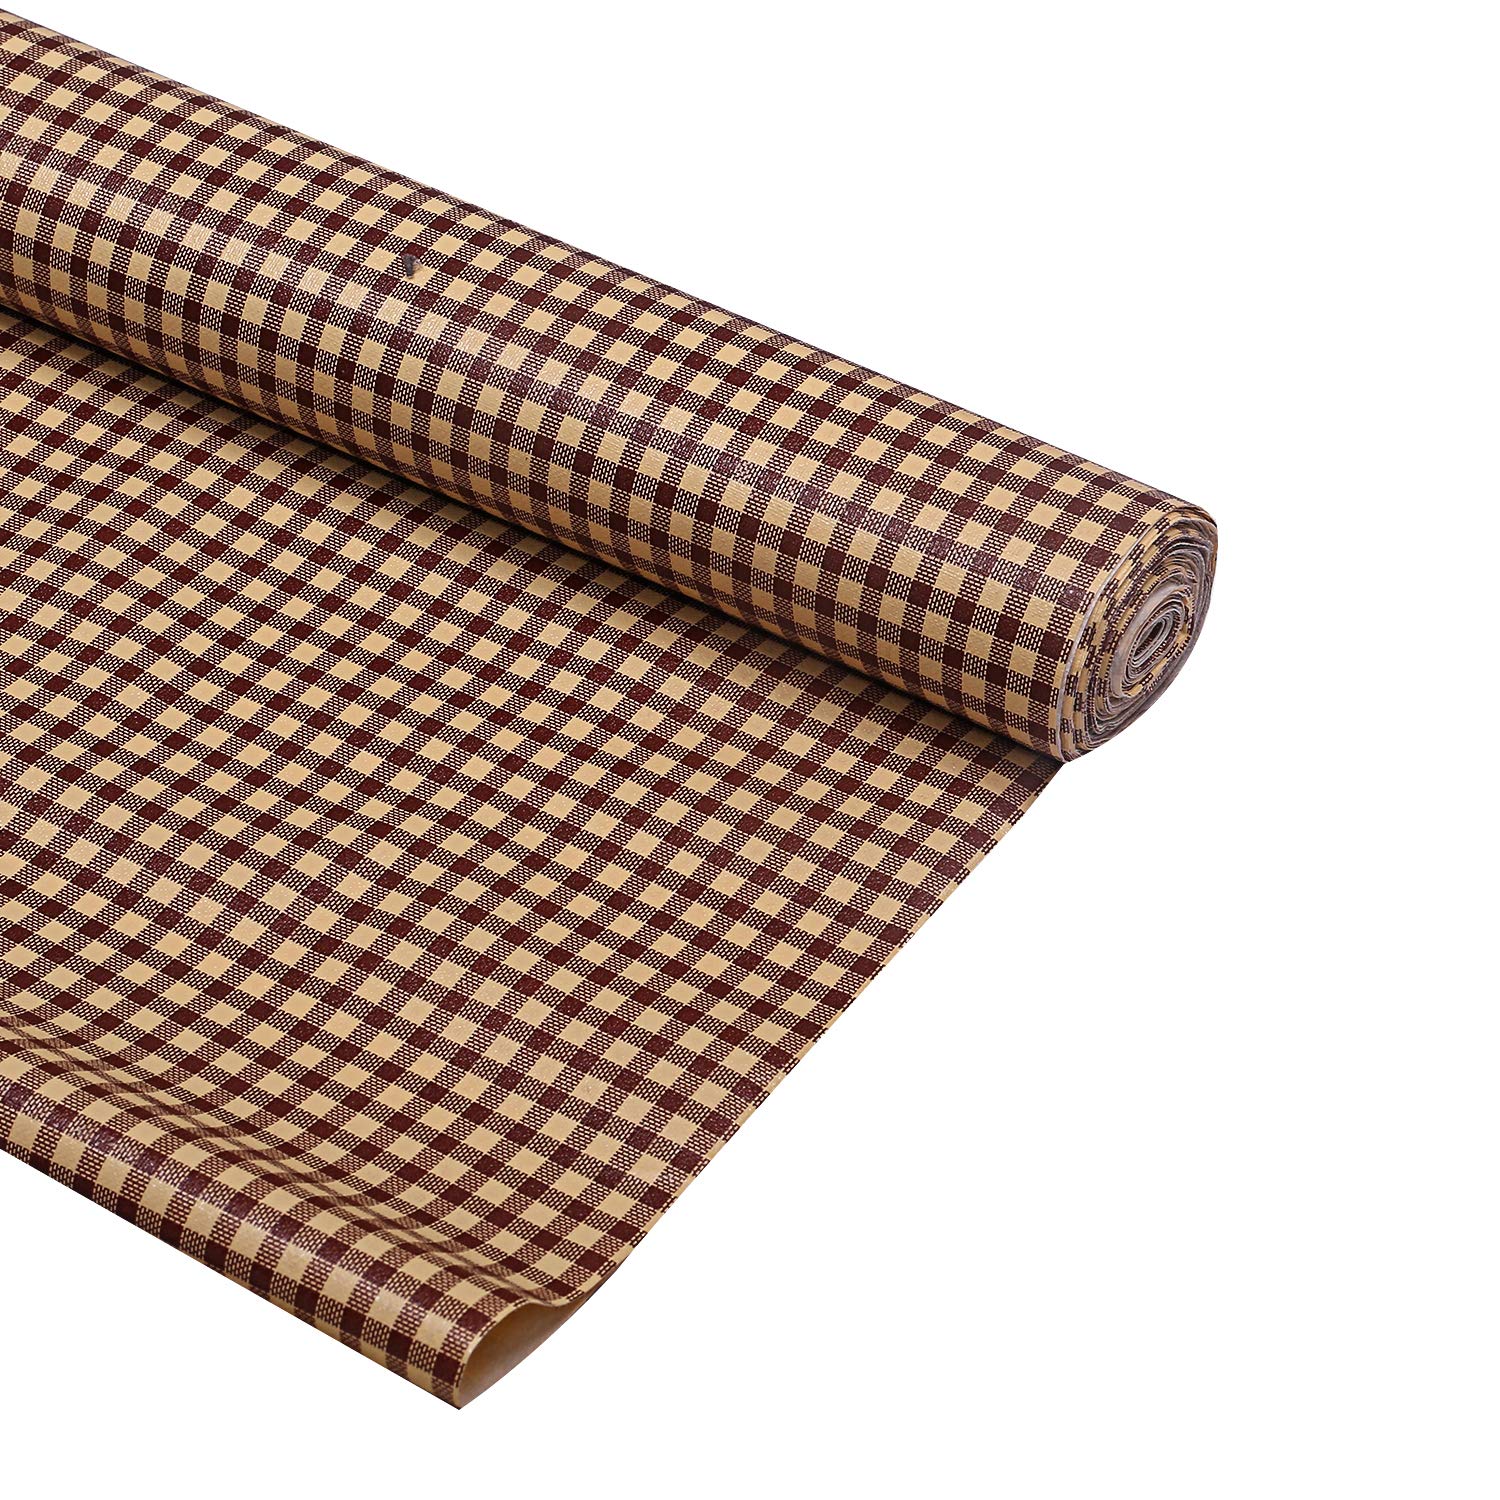 Kuber Industries PVC Wardrobe Kitchen Drawer Shelf Mat 10 Meter Roll (Brown) -CTLTC11321, Standard (CTLTC011321)